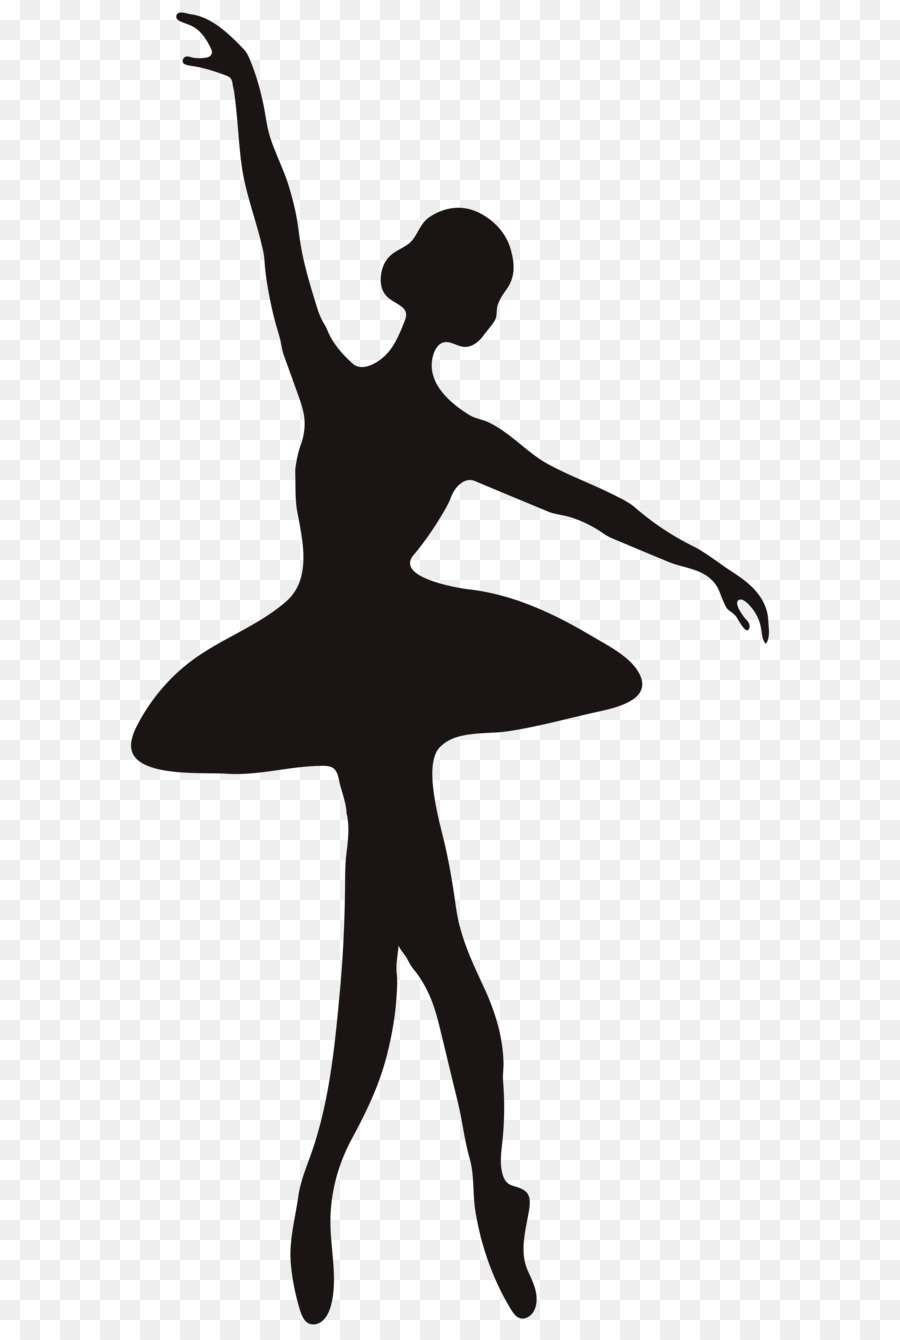 Ballet Dancer Silhouette Spinning Dancer - Ballerina Silhouette PNG Clip Art Image png download - 3890*8000 - Free Transparent Ballet Dancer png Download.